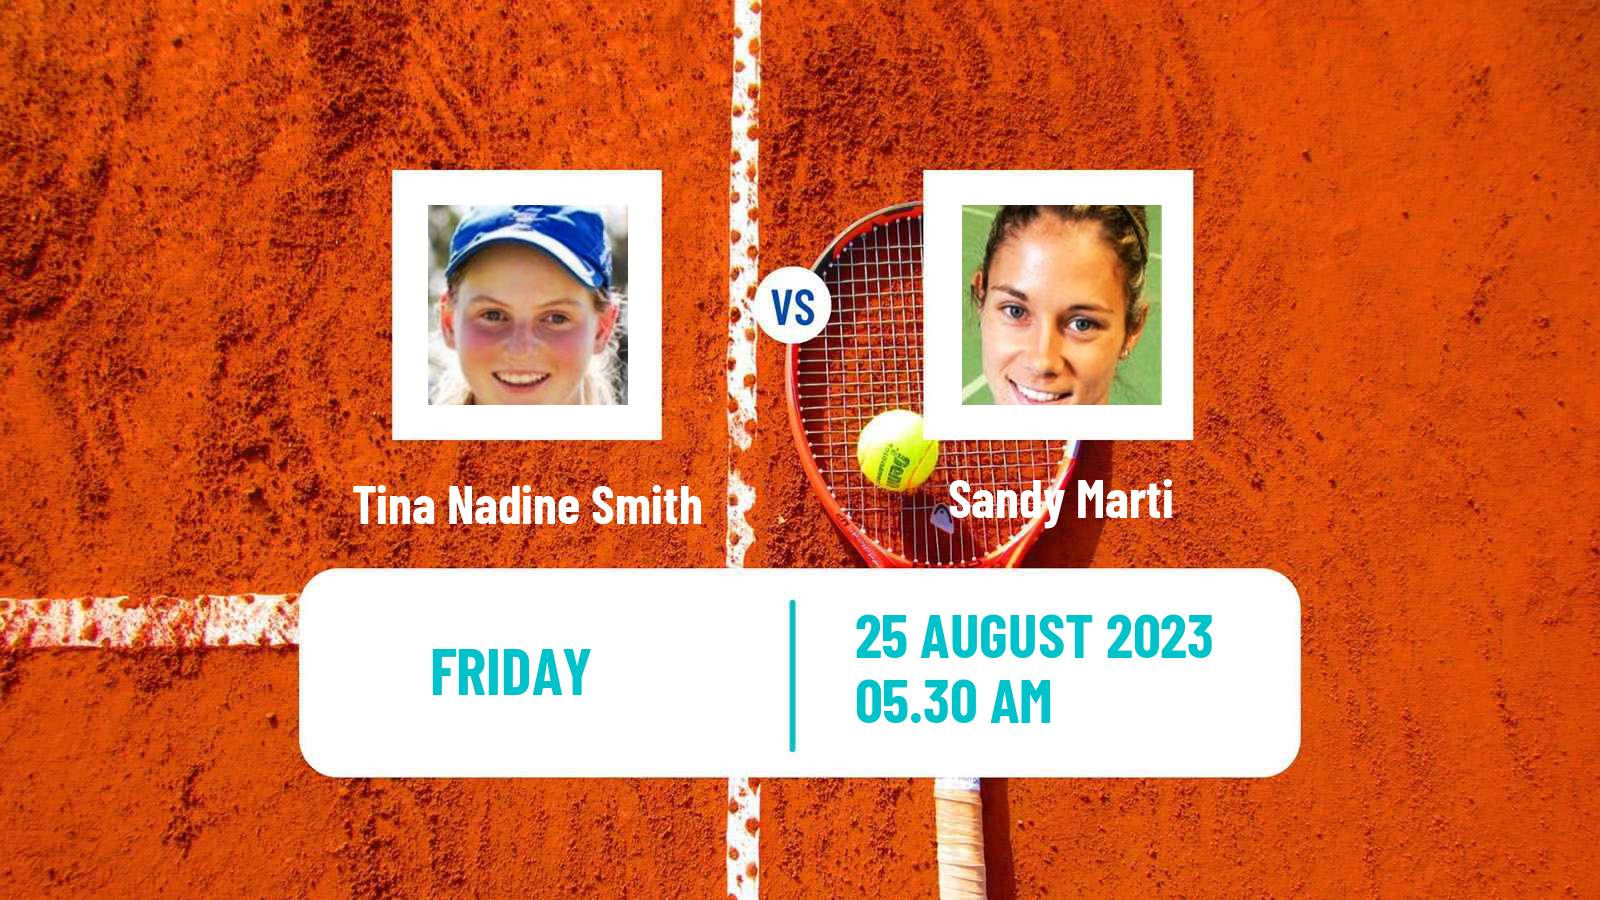 Tennis ITF W25 Verbier Women Tina Nadine Smith - Sandy Marti